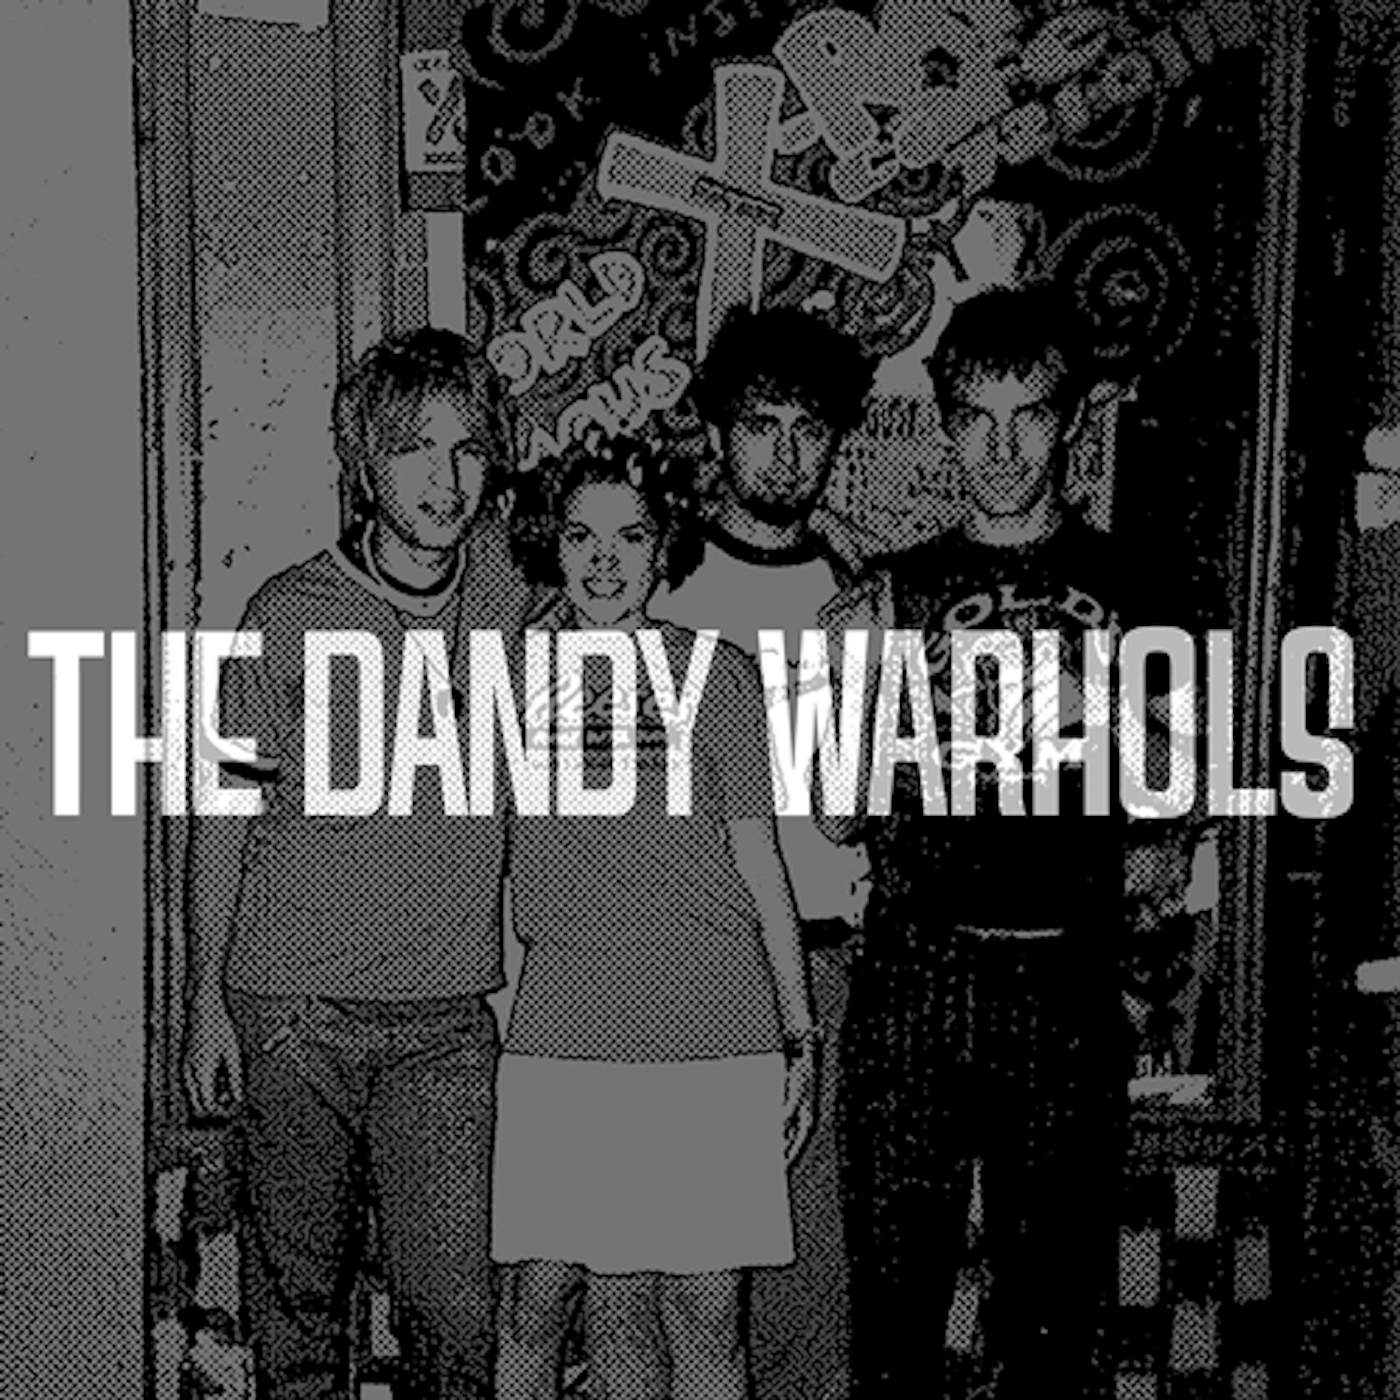 The Dandy Warhols LIVE AT THE X-RAY CAFI Vinyl Record